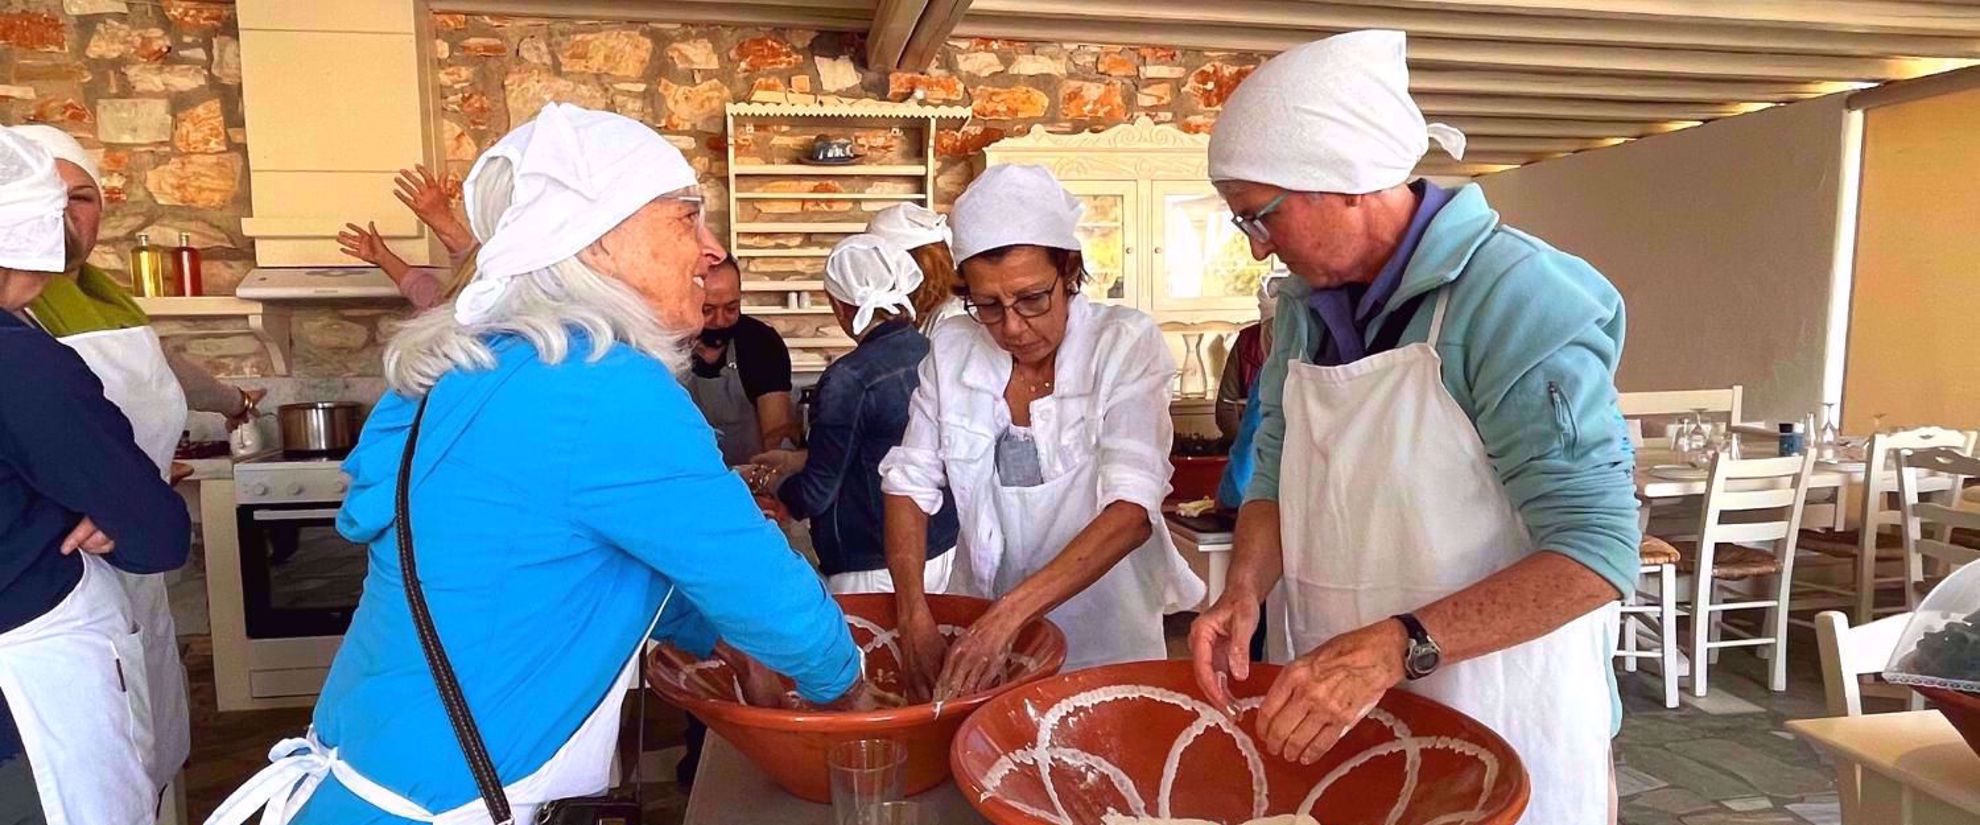 Greek cooking class on an active women's tour